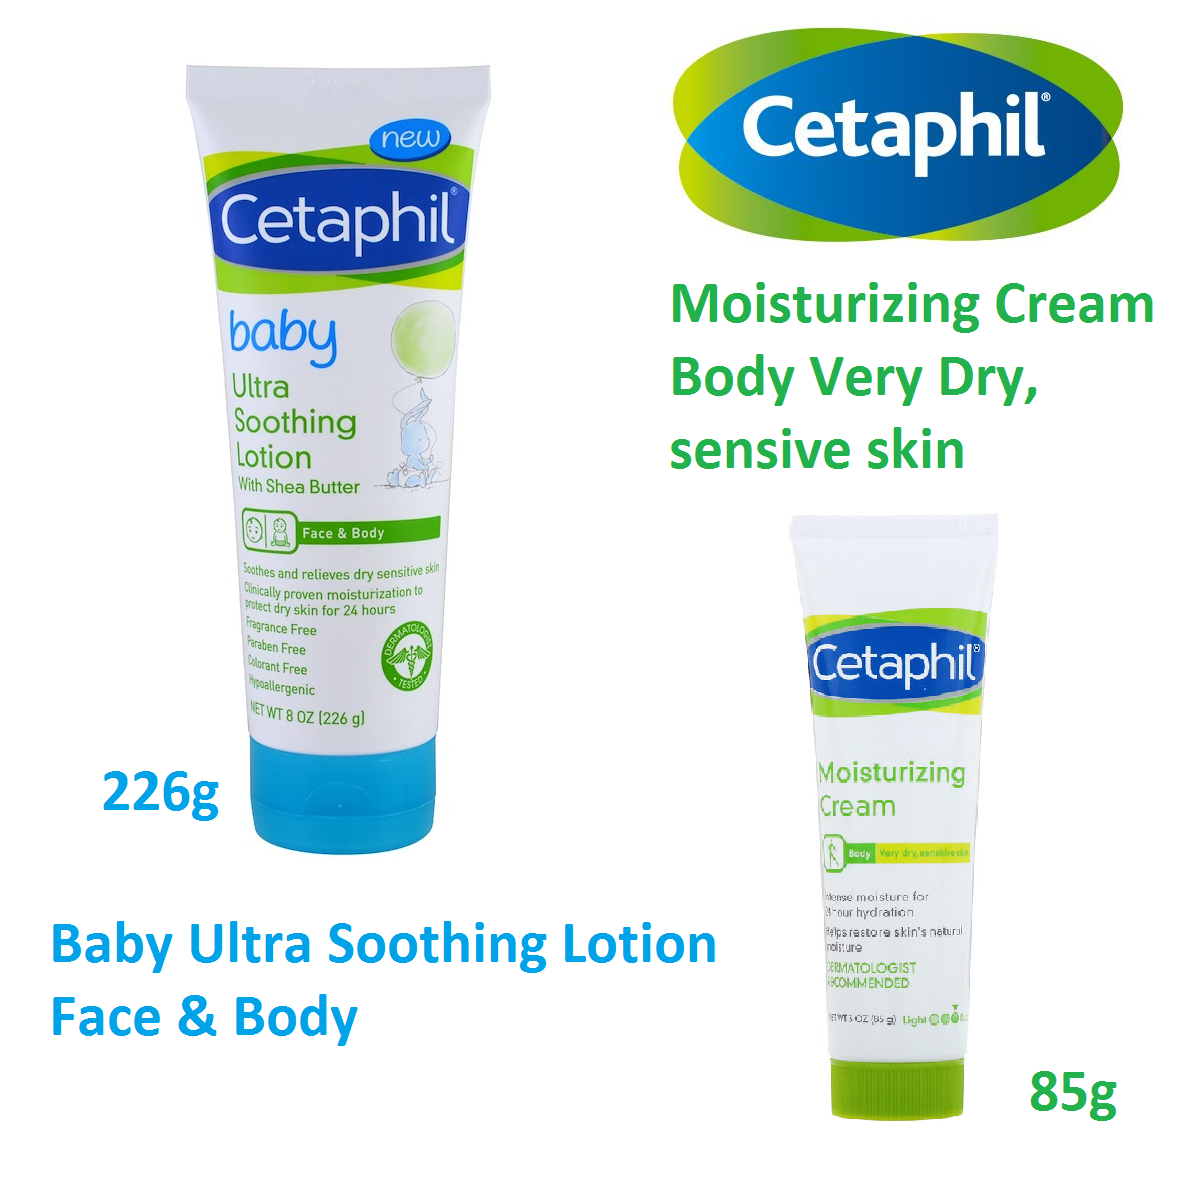 Cetaphil Baby Ultra Soothing Lotion With Shea Butter 226g ใช้ทาใบหน้าและร่างกาย แนะนำโดยแพทย์ผิวหนังและกุมารแพทย์ ผู้เชี่ยวชาญด้านการดูแลผิวที่บ Moisturizing Cream 85g